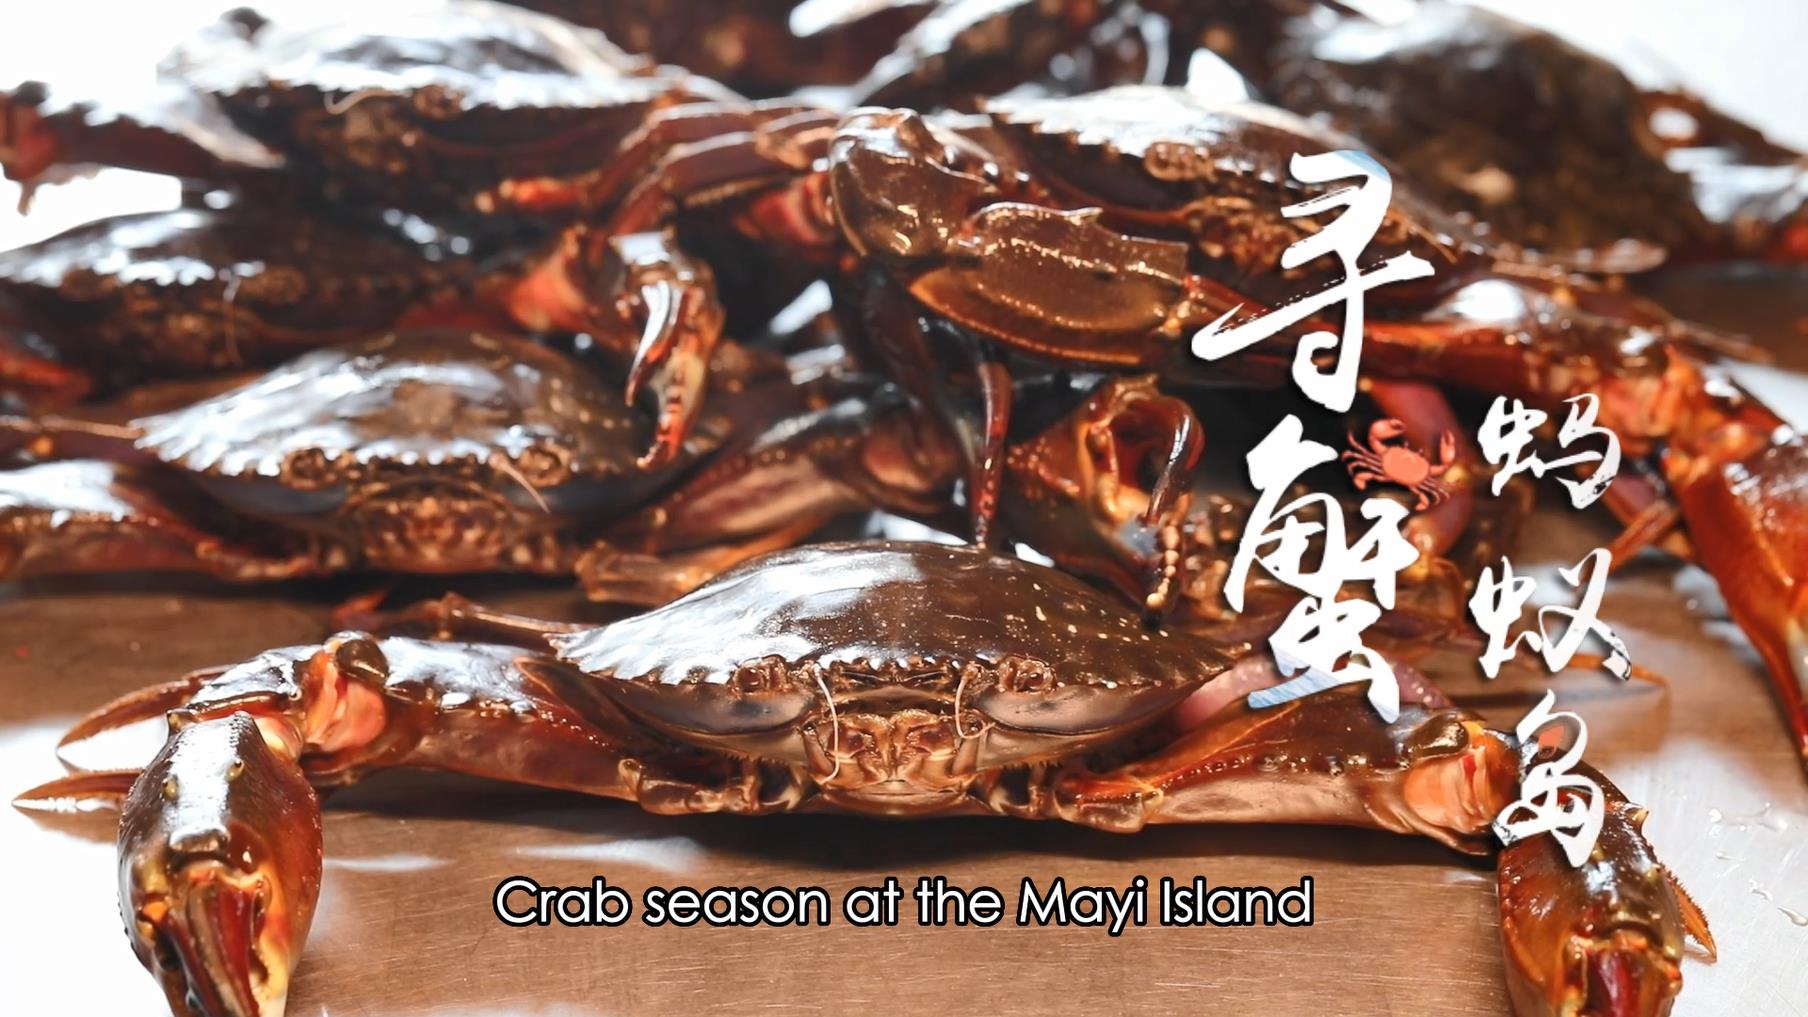 Crab season on Mayi Island